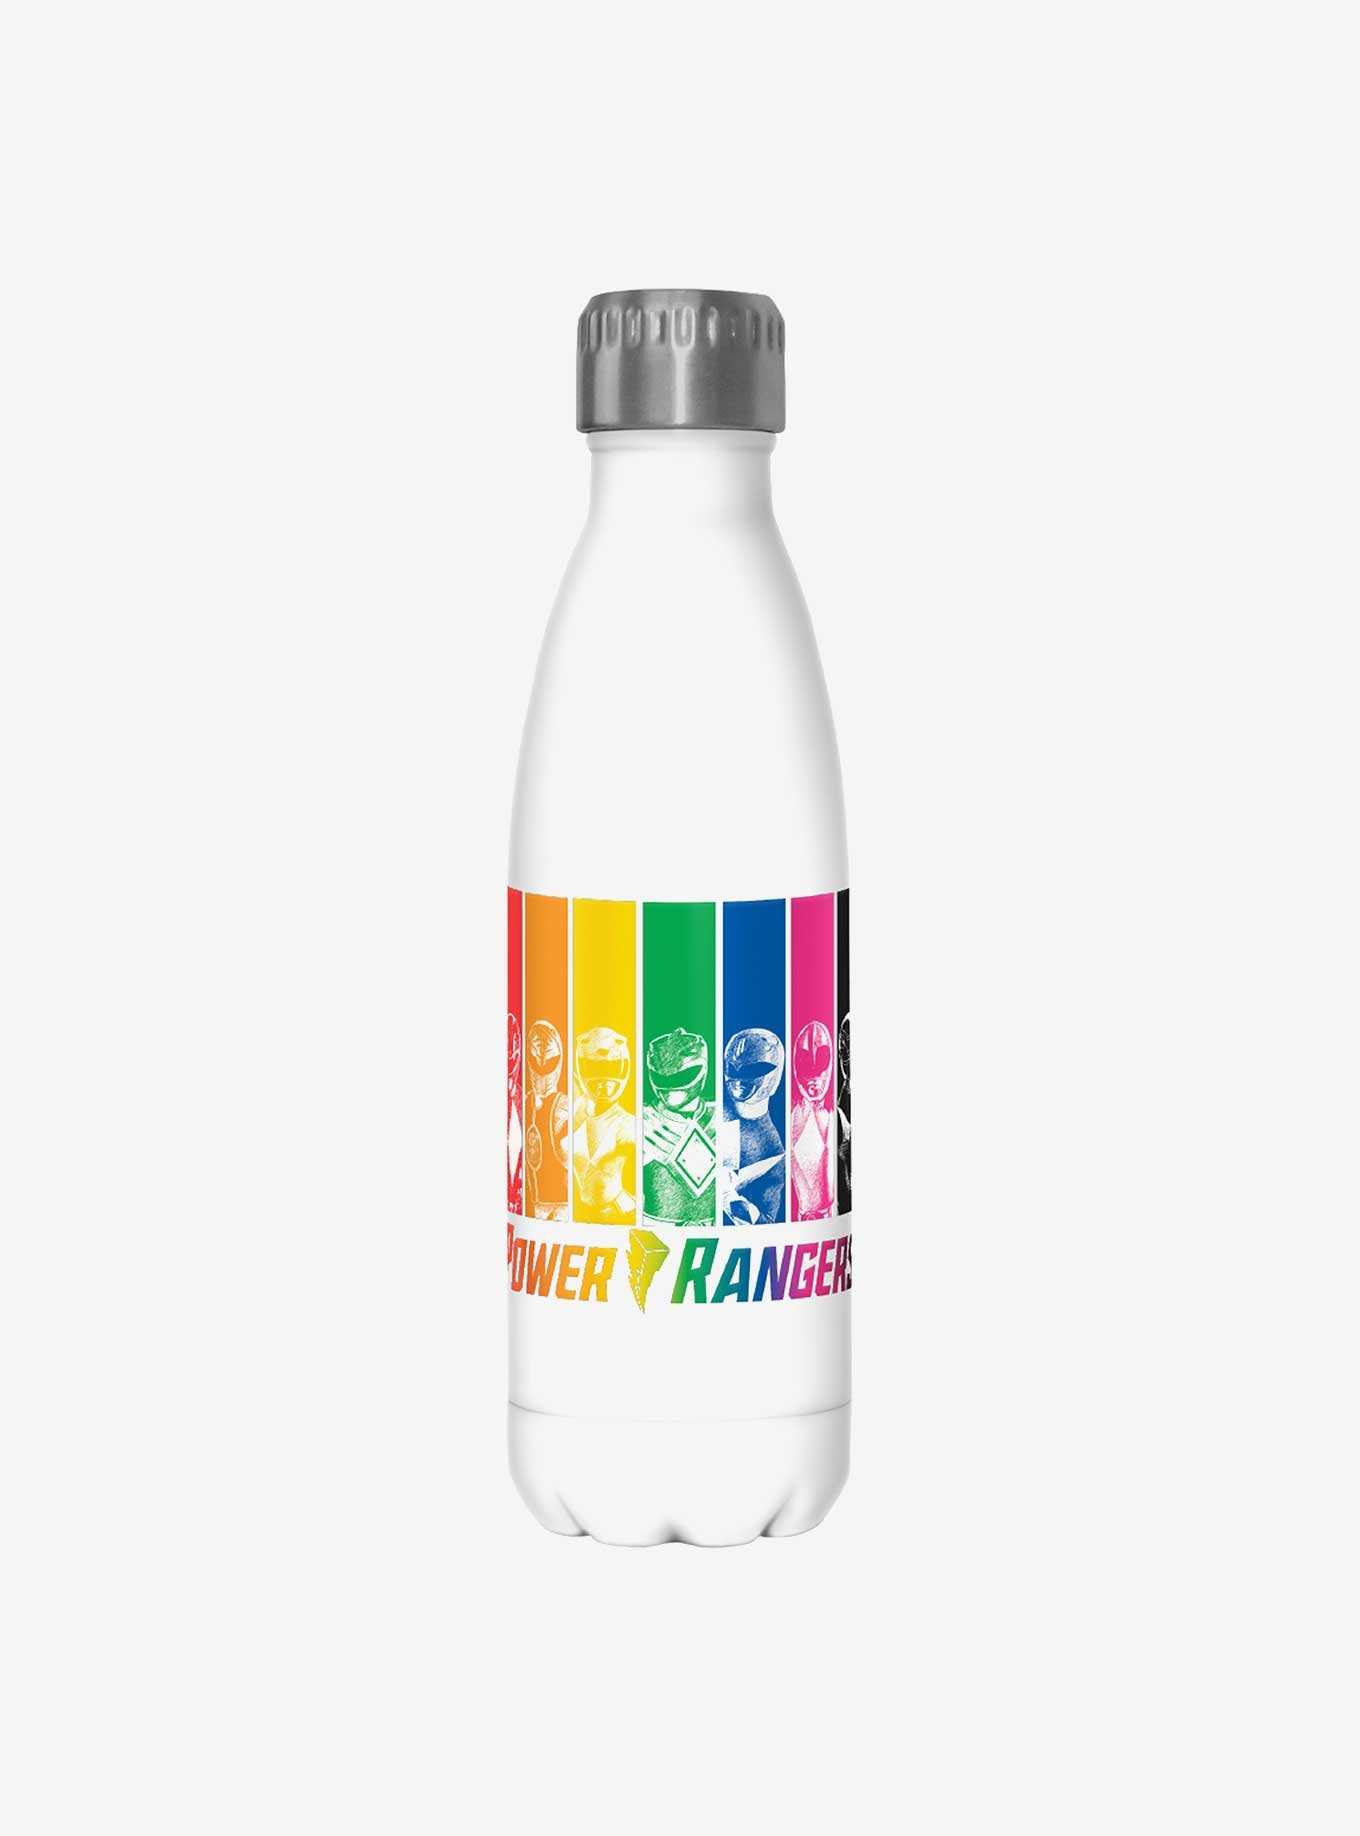 Funny Water Bottles - Novelty Drinkware Designs